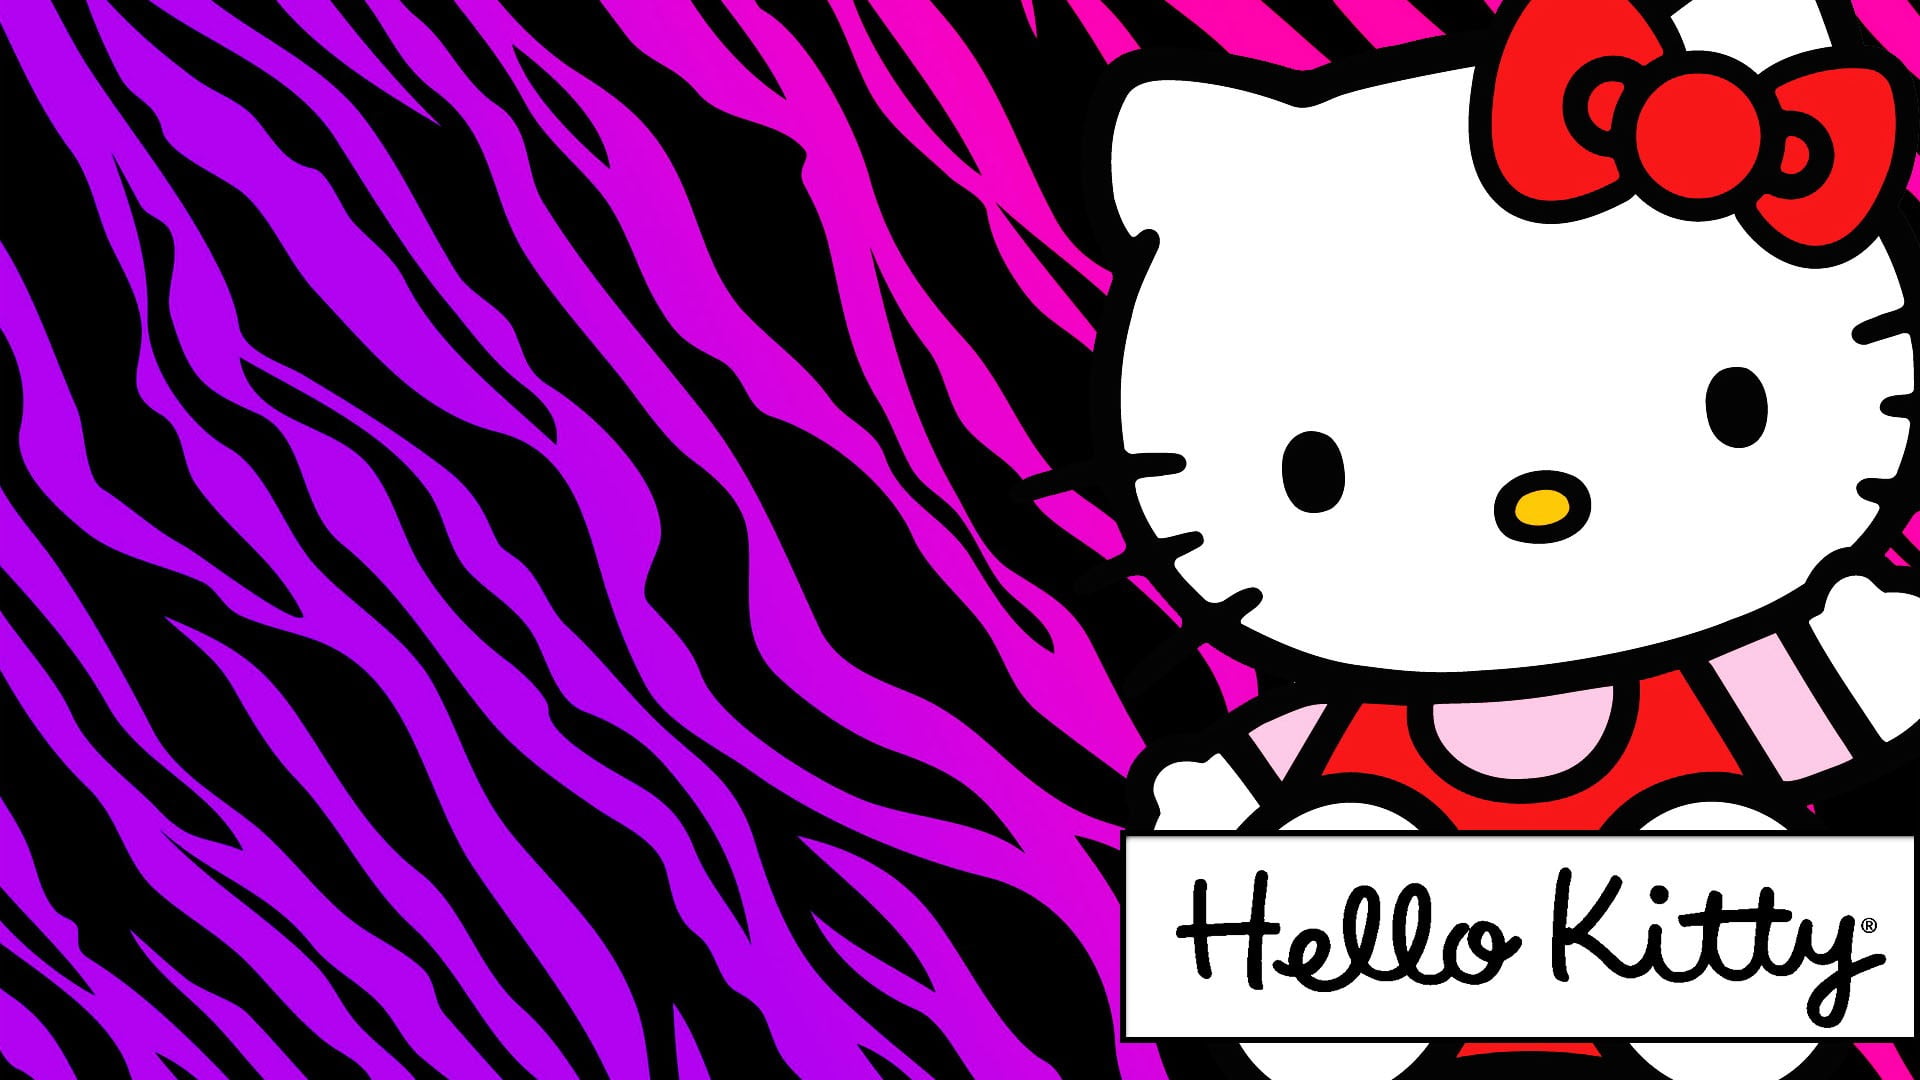 Hello Kitty logo, kittens, cat, Japanese, text, communication